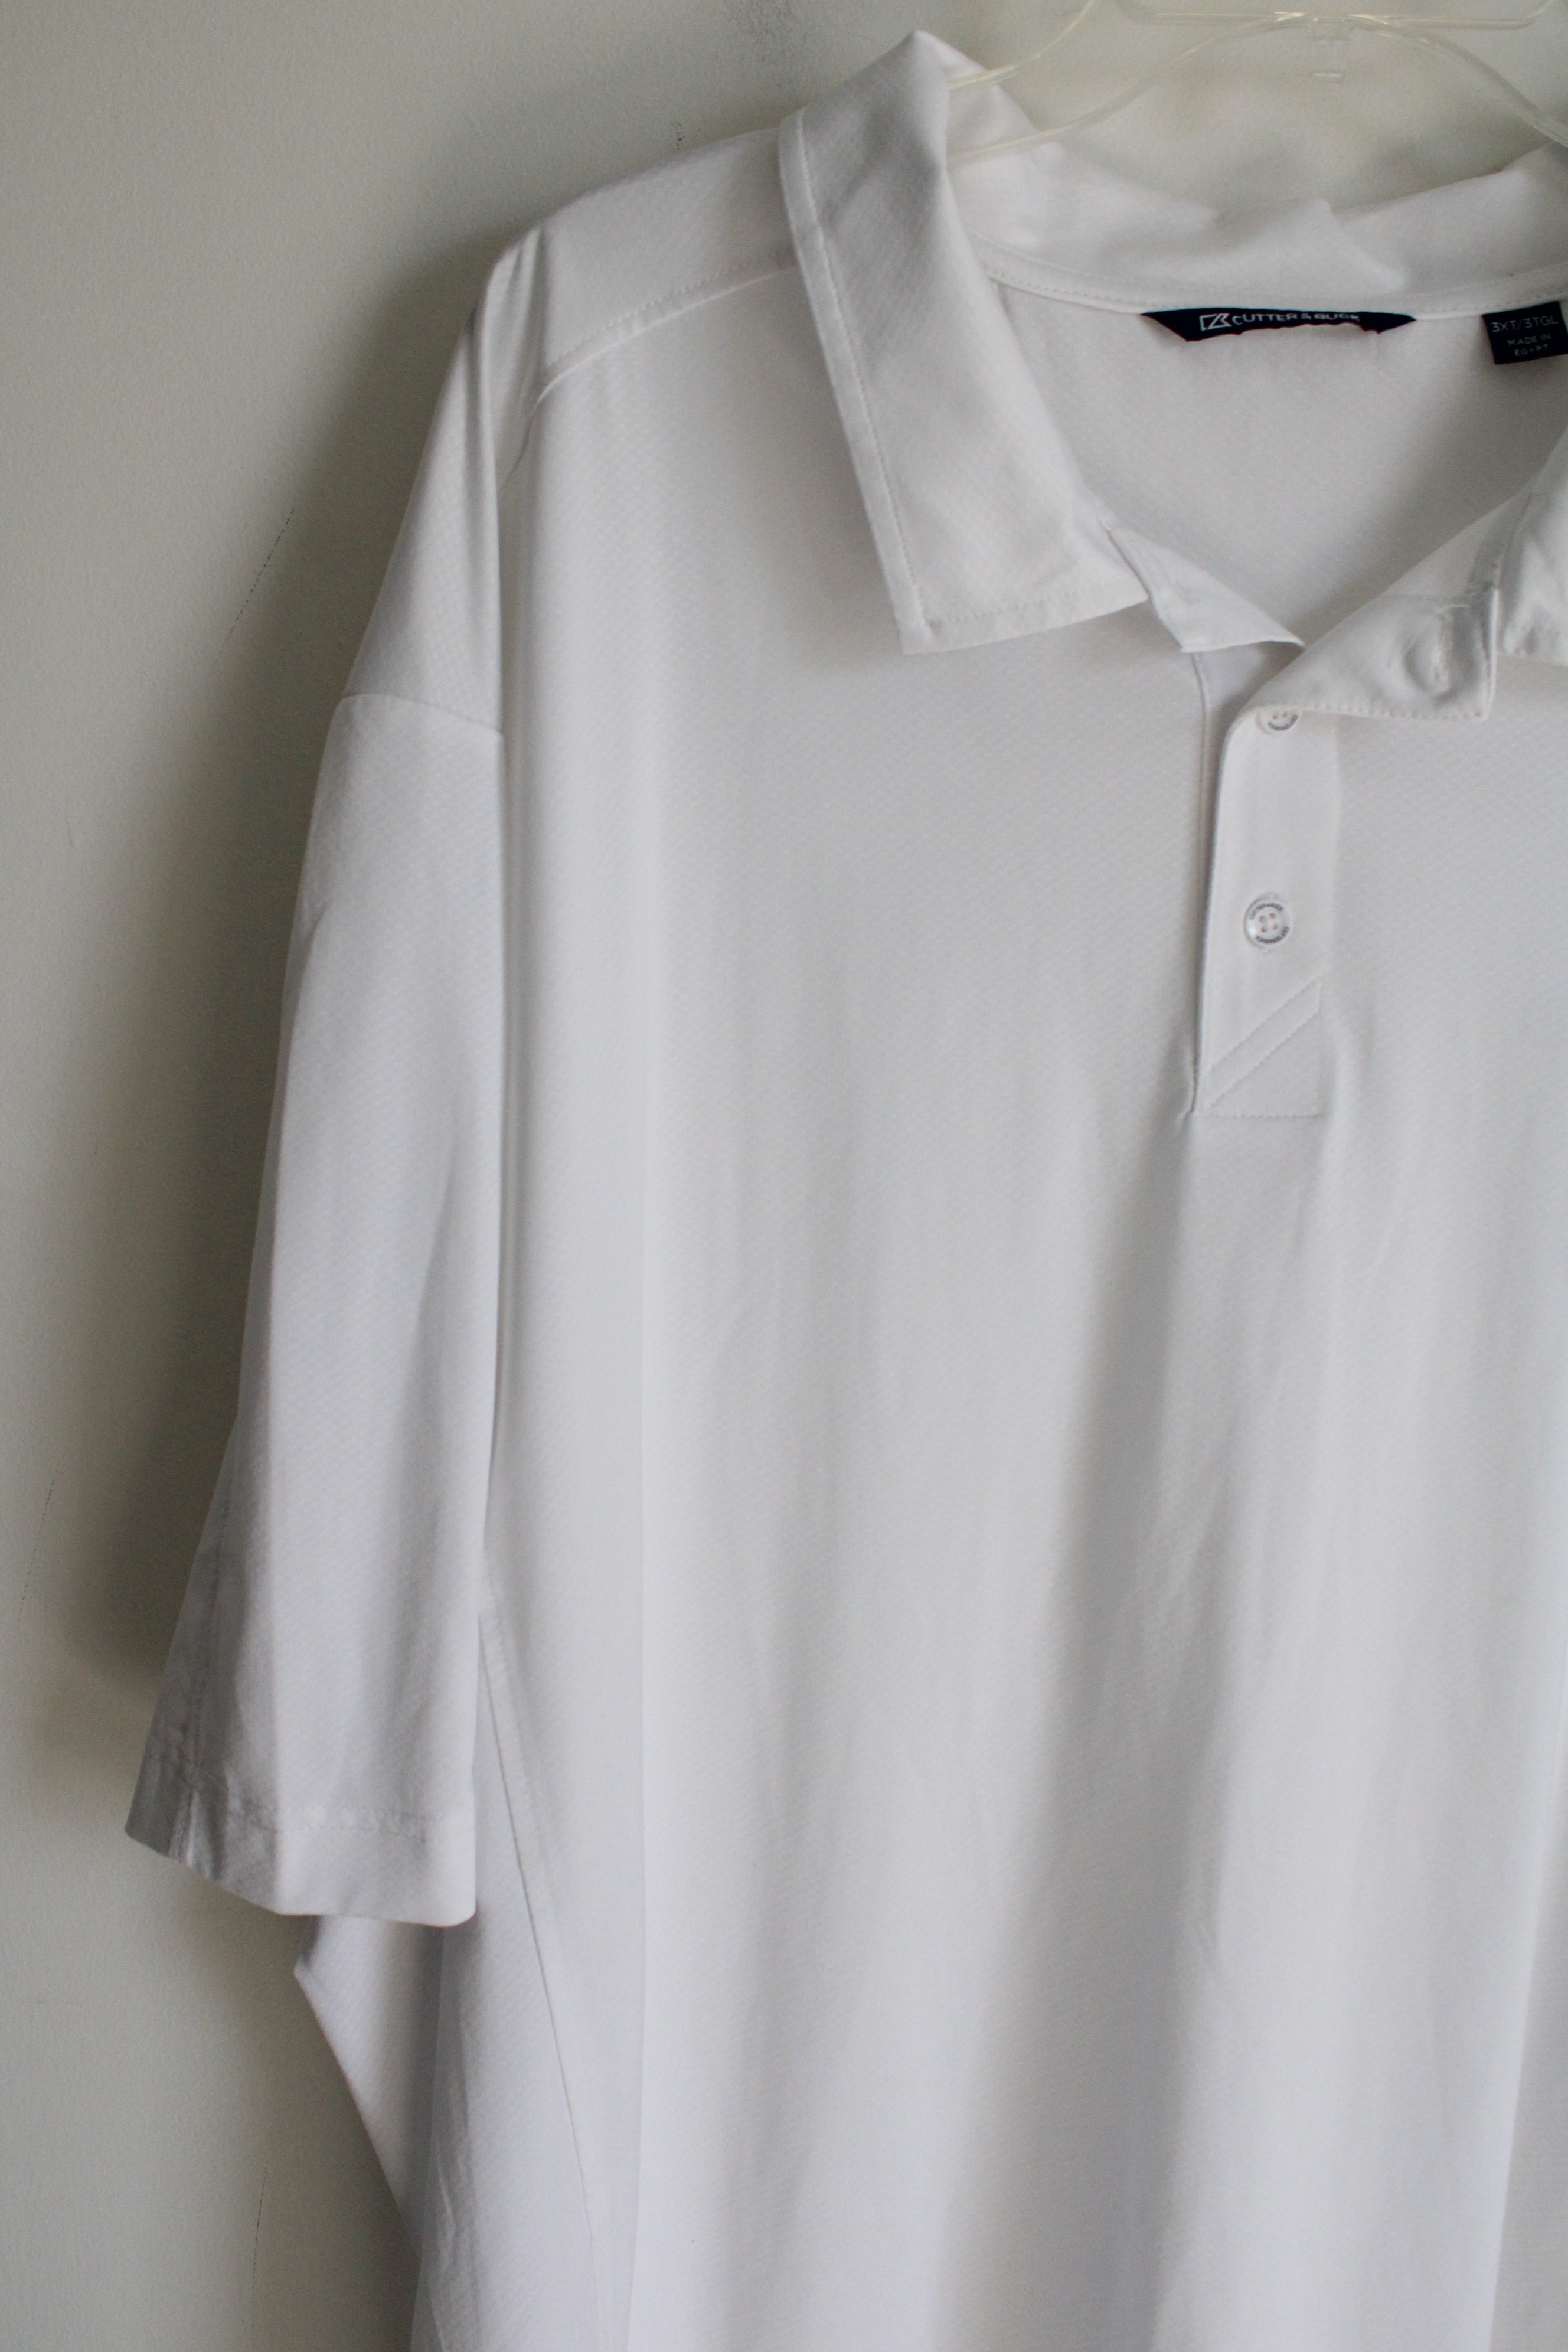 Cutter & Buck White Polo Shirt | 3XL Tall